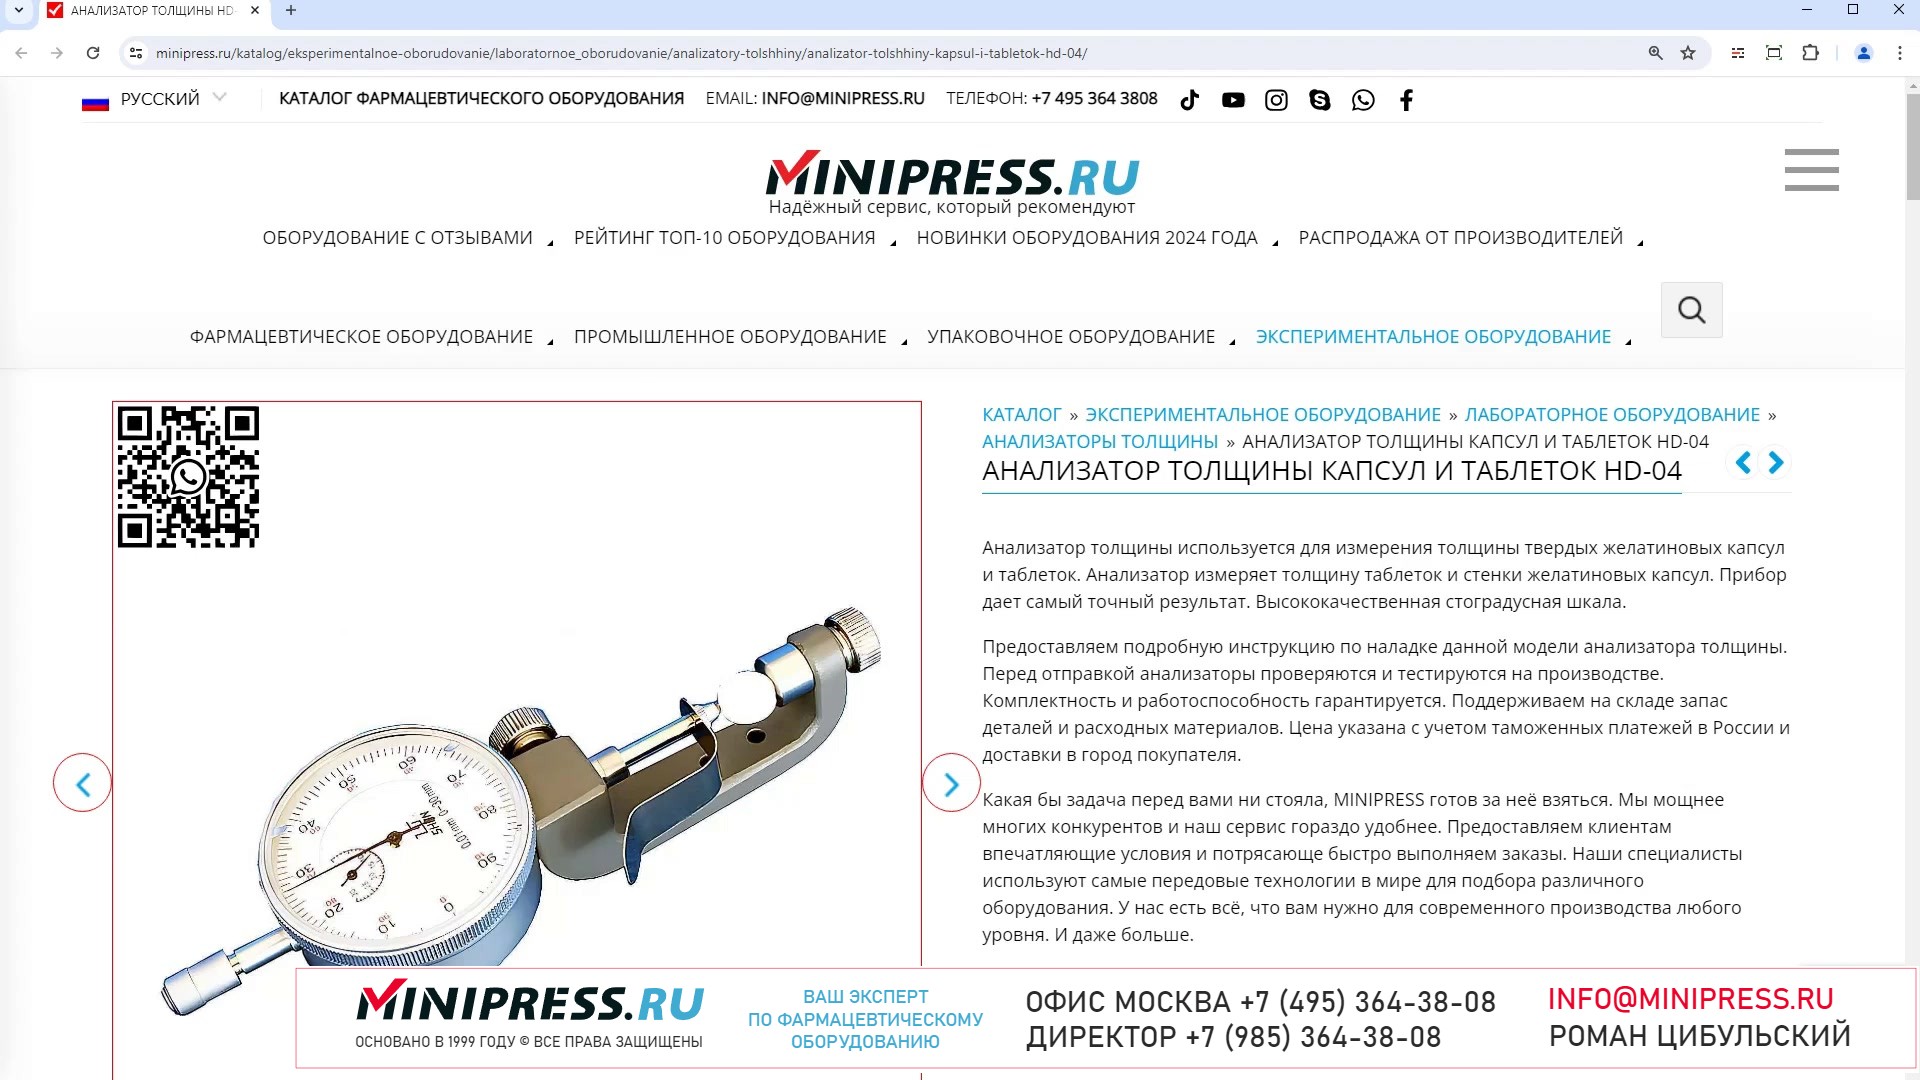 Minipress.ru Анализатор толщины капсул и таблеток HD-04